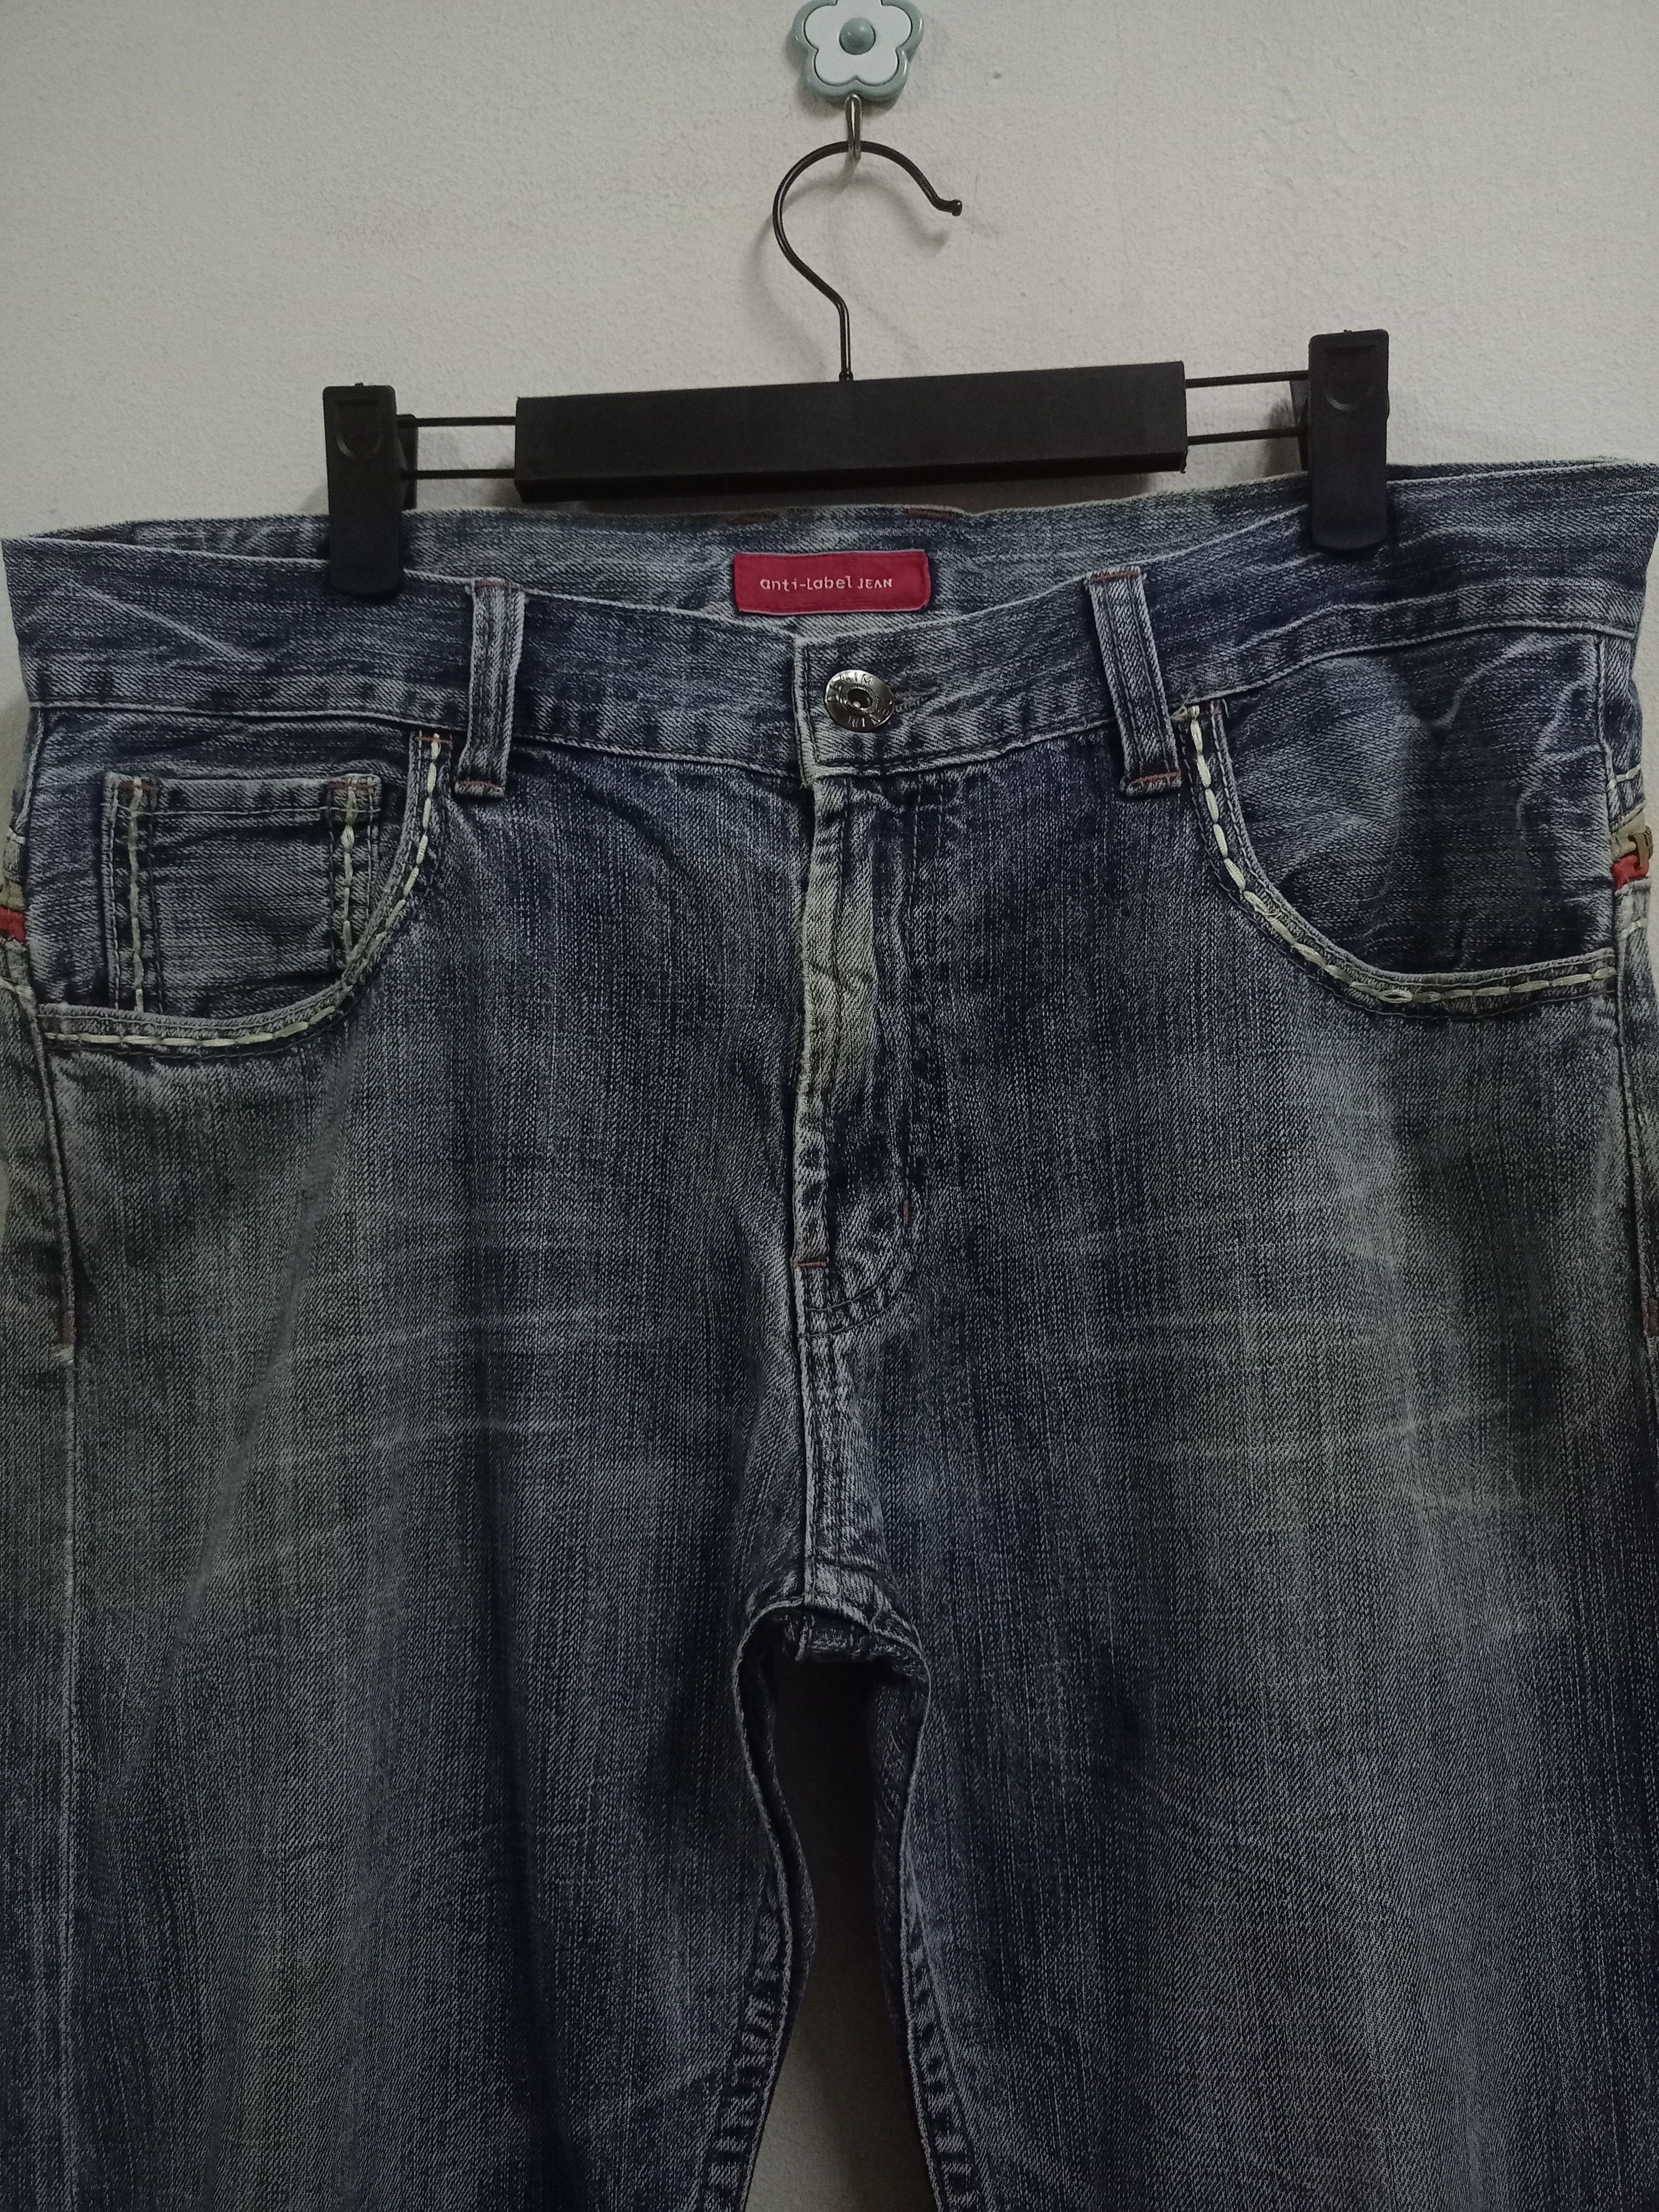 Distressed Denim Vintage Anti Label Blue Wash Distressed Baggy Jeans 35x29 Size US 35 - 4 Thumbnail